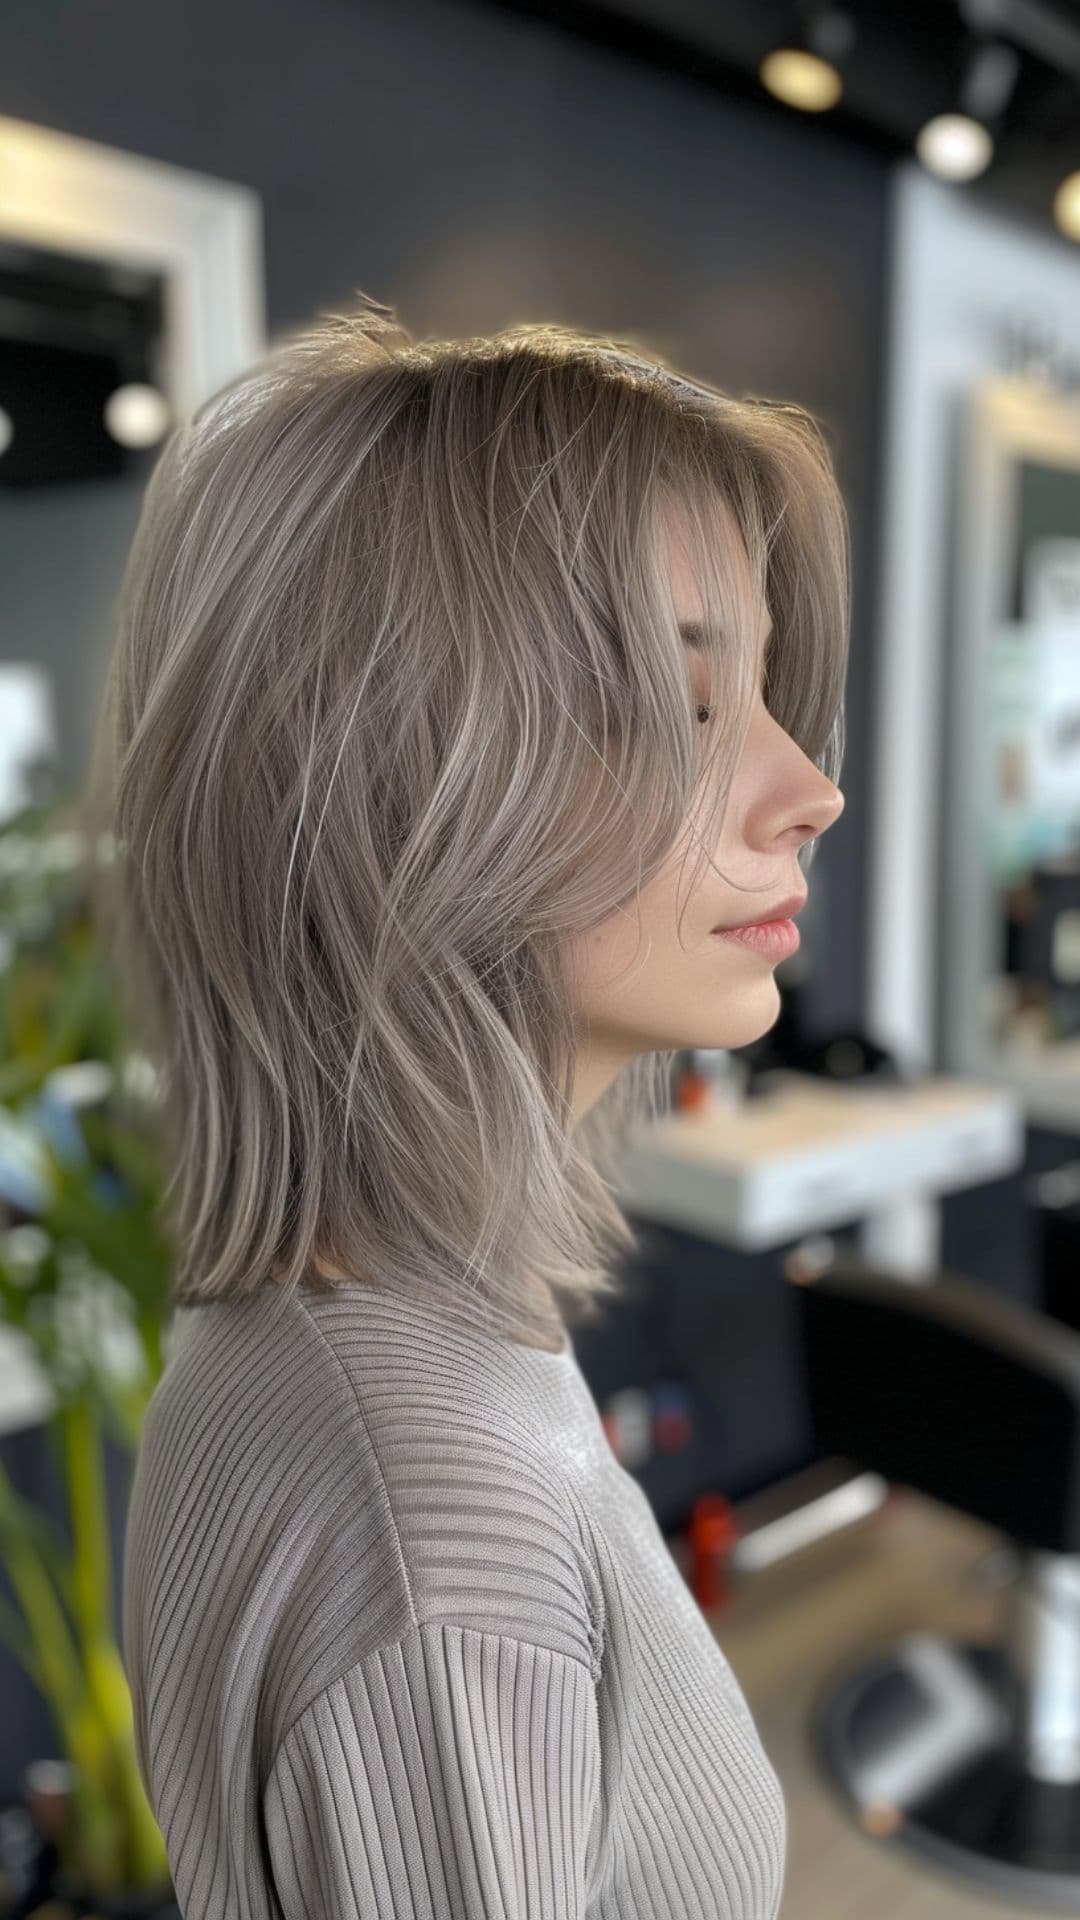 A woman modelling a short smoky gray hair.